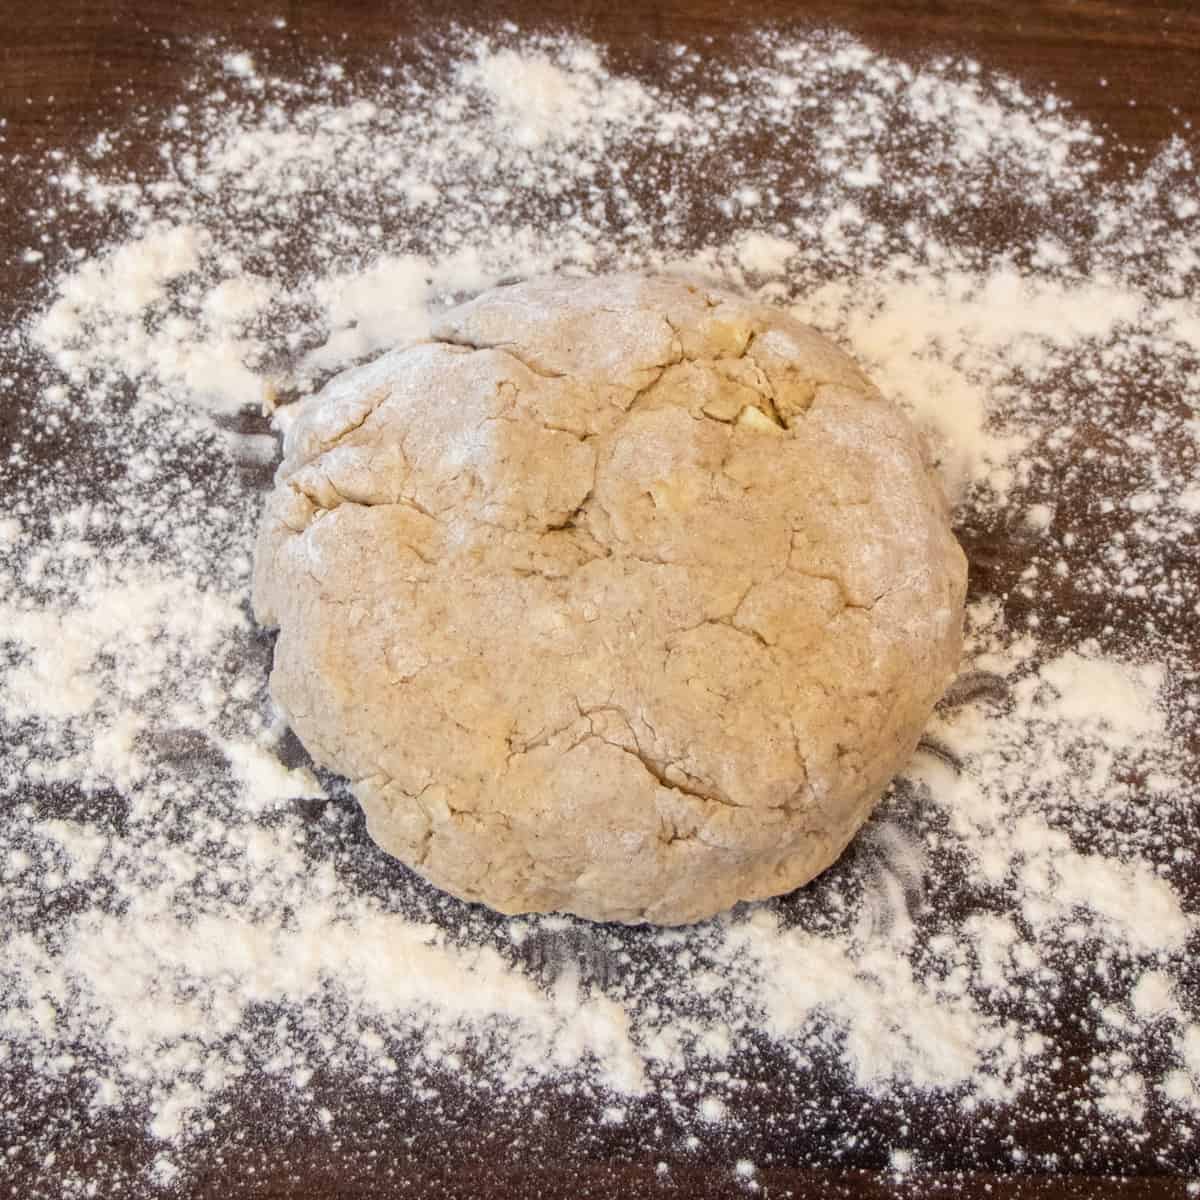 Scone dough on a lightly floured work surface.